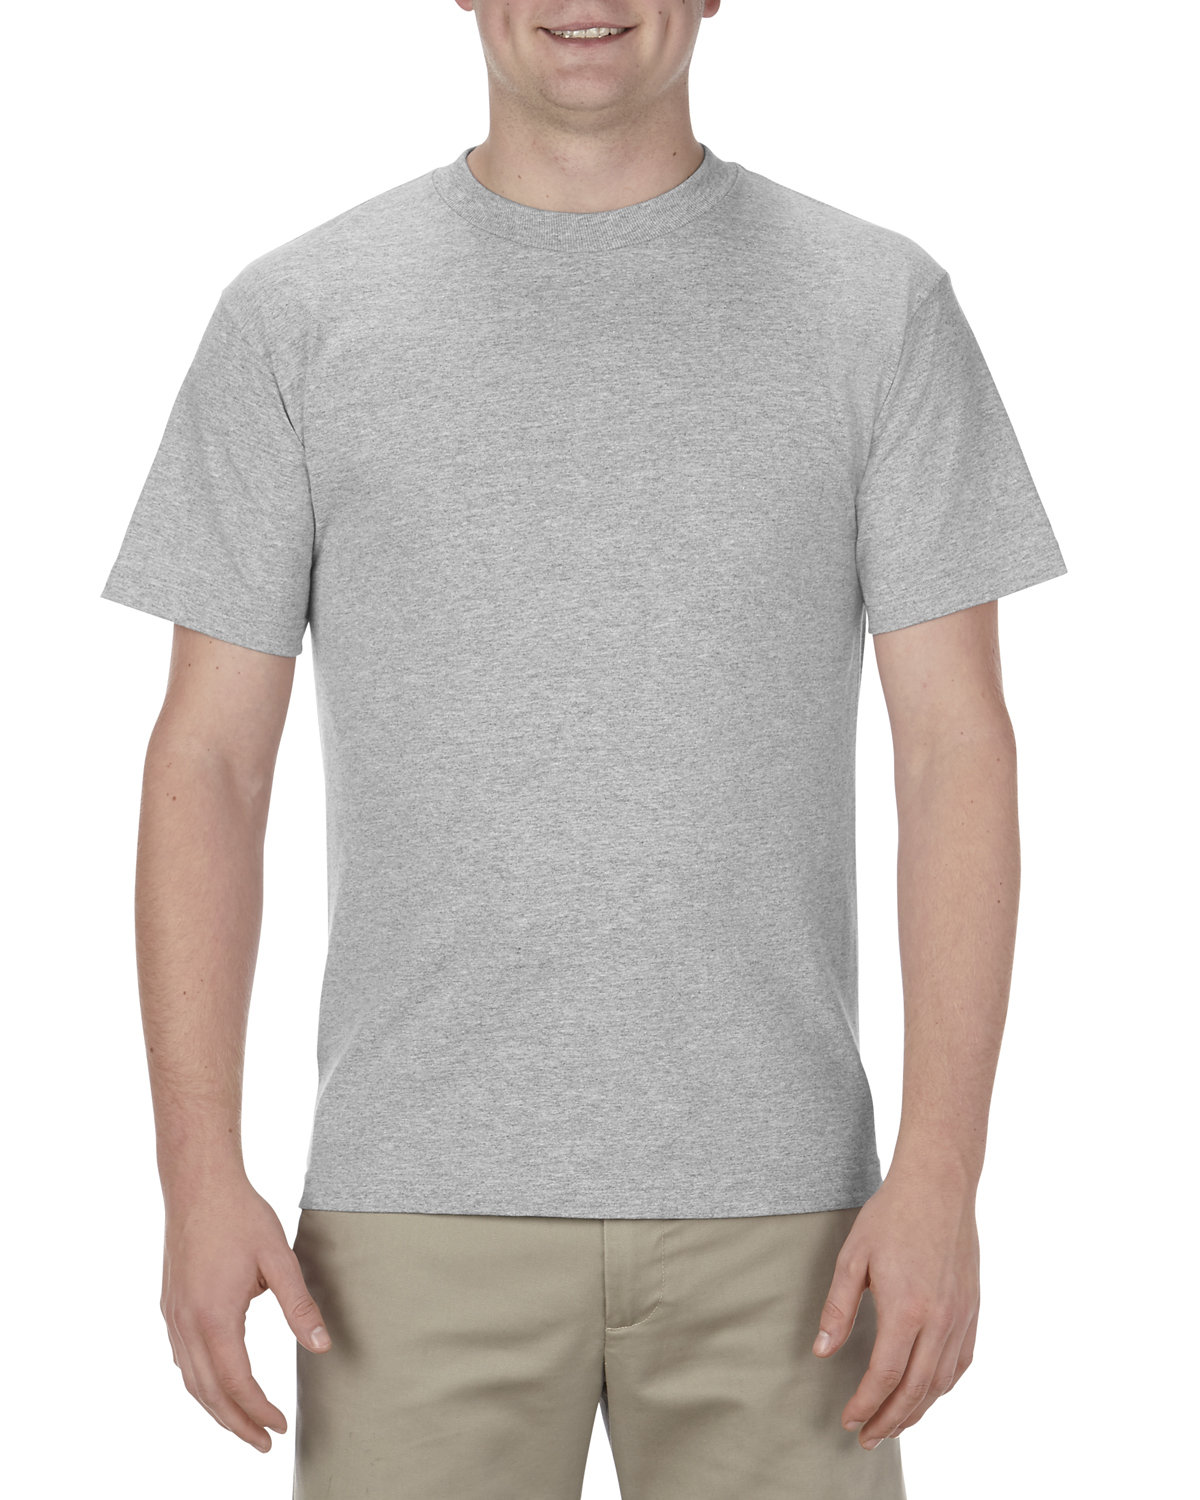 American Apparel Unisex Heavyweight Cotton T-Shirt heather grey 